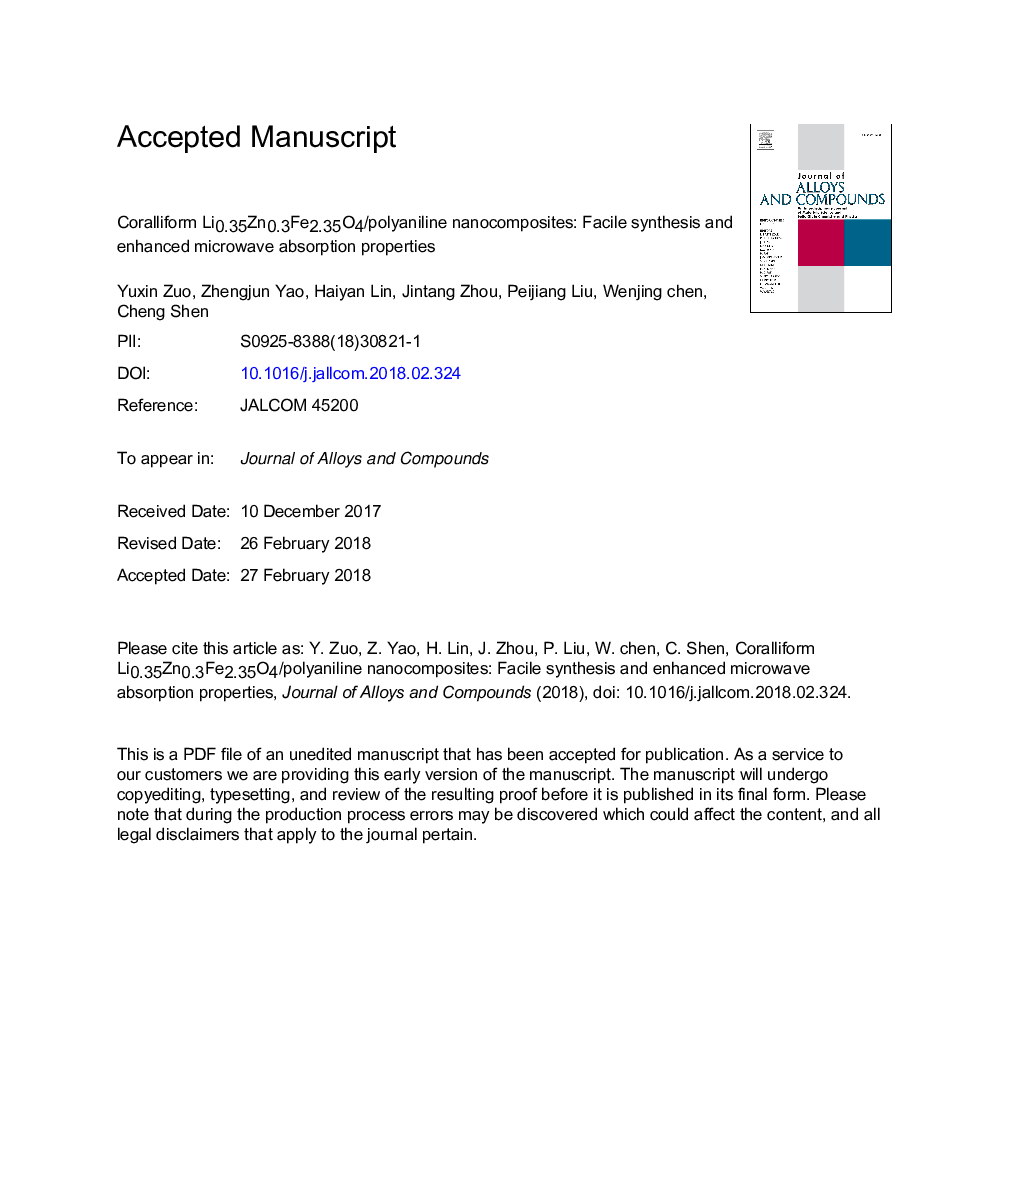 Coralliform Li0.35Zn0.3Fe2.35O4/polyaniline nanocomposites: Facile synthesis and enhanced microwave absorption properties